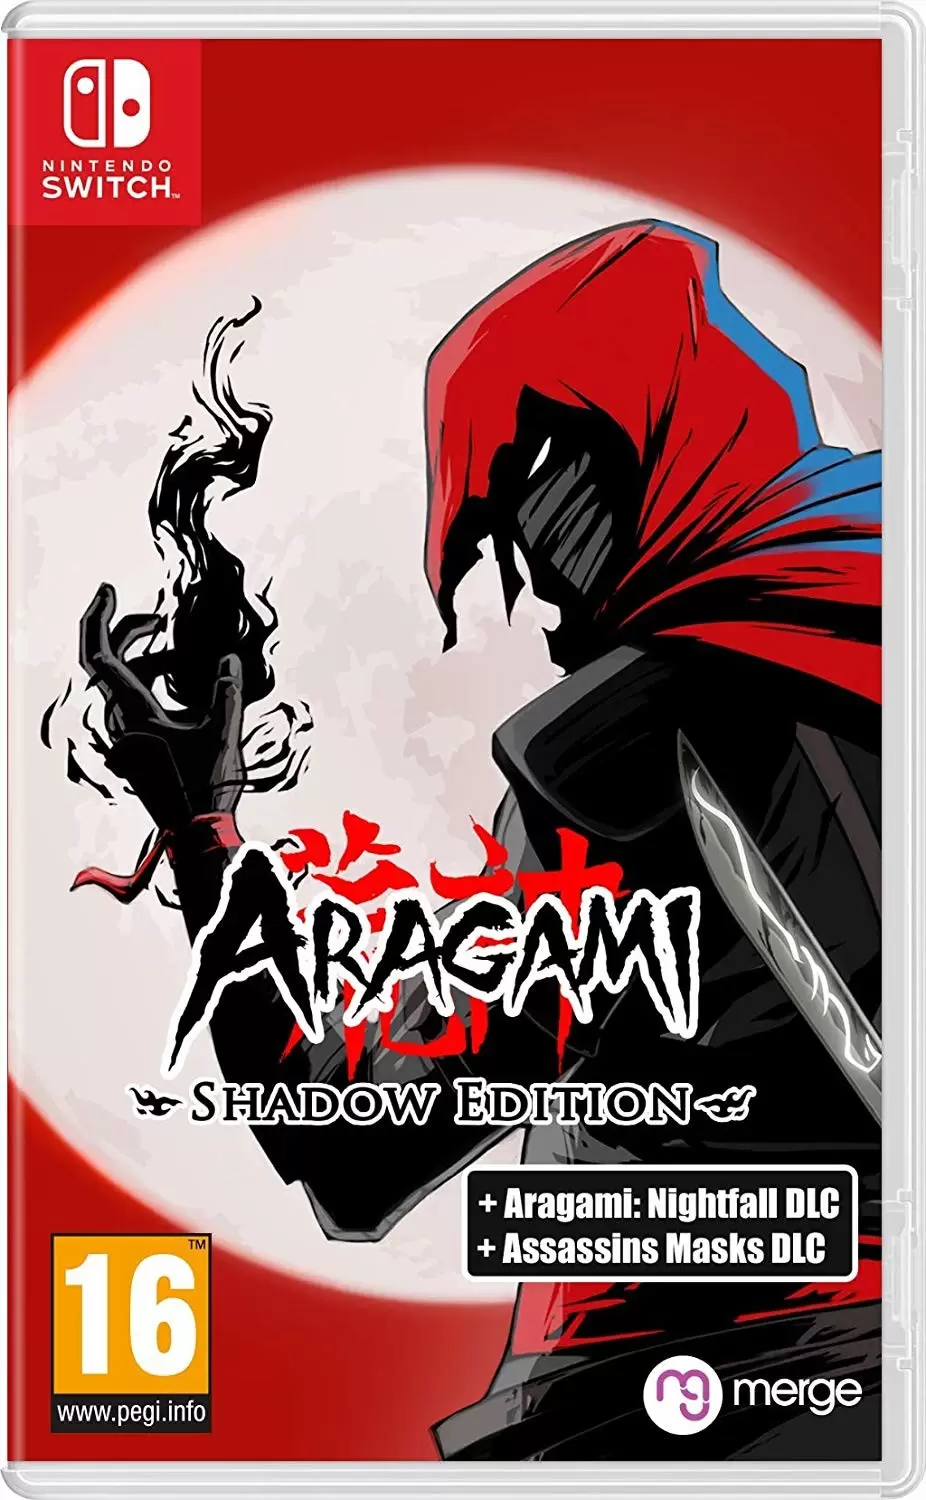 Nintendo Switch Games - Aragami - Shadow Edition